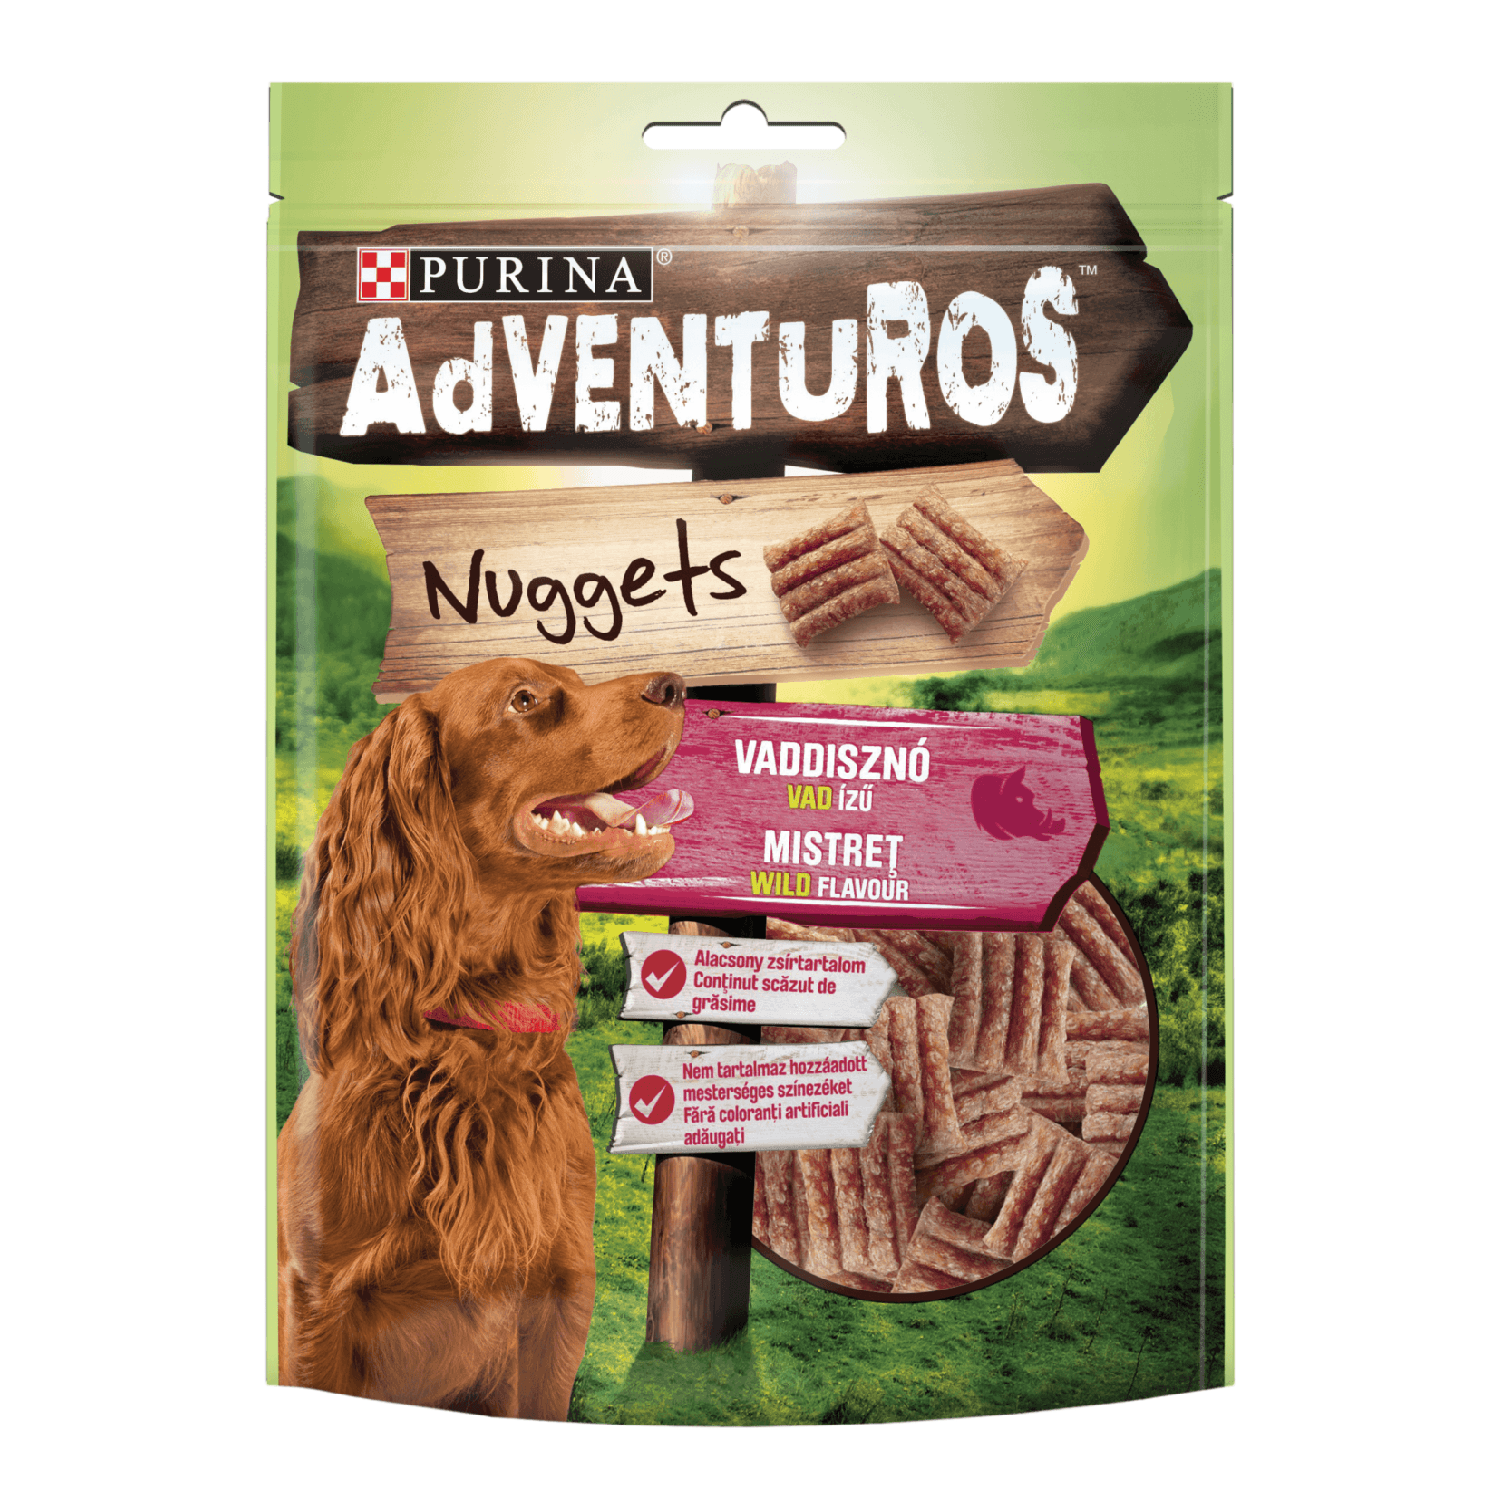 PURINA Adventuros nuggets дополнителна храна за кучиња